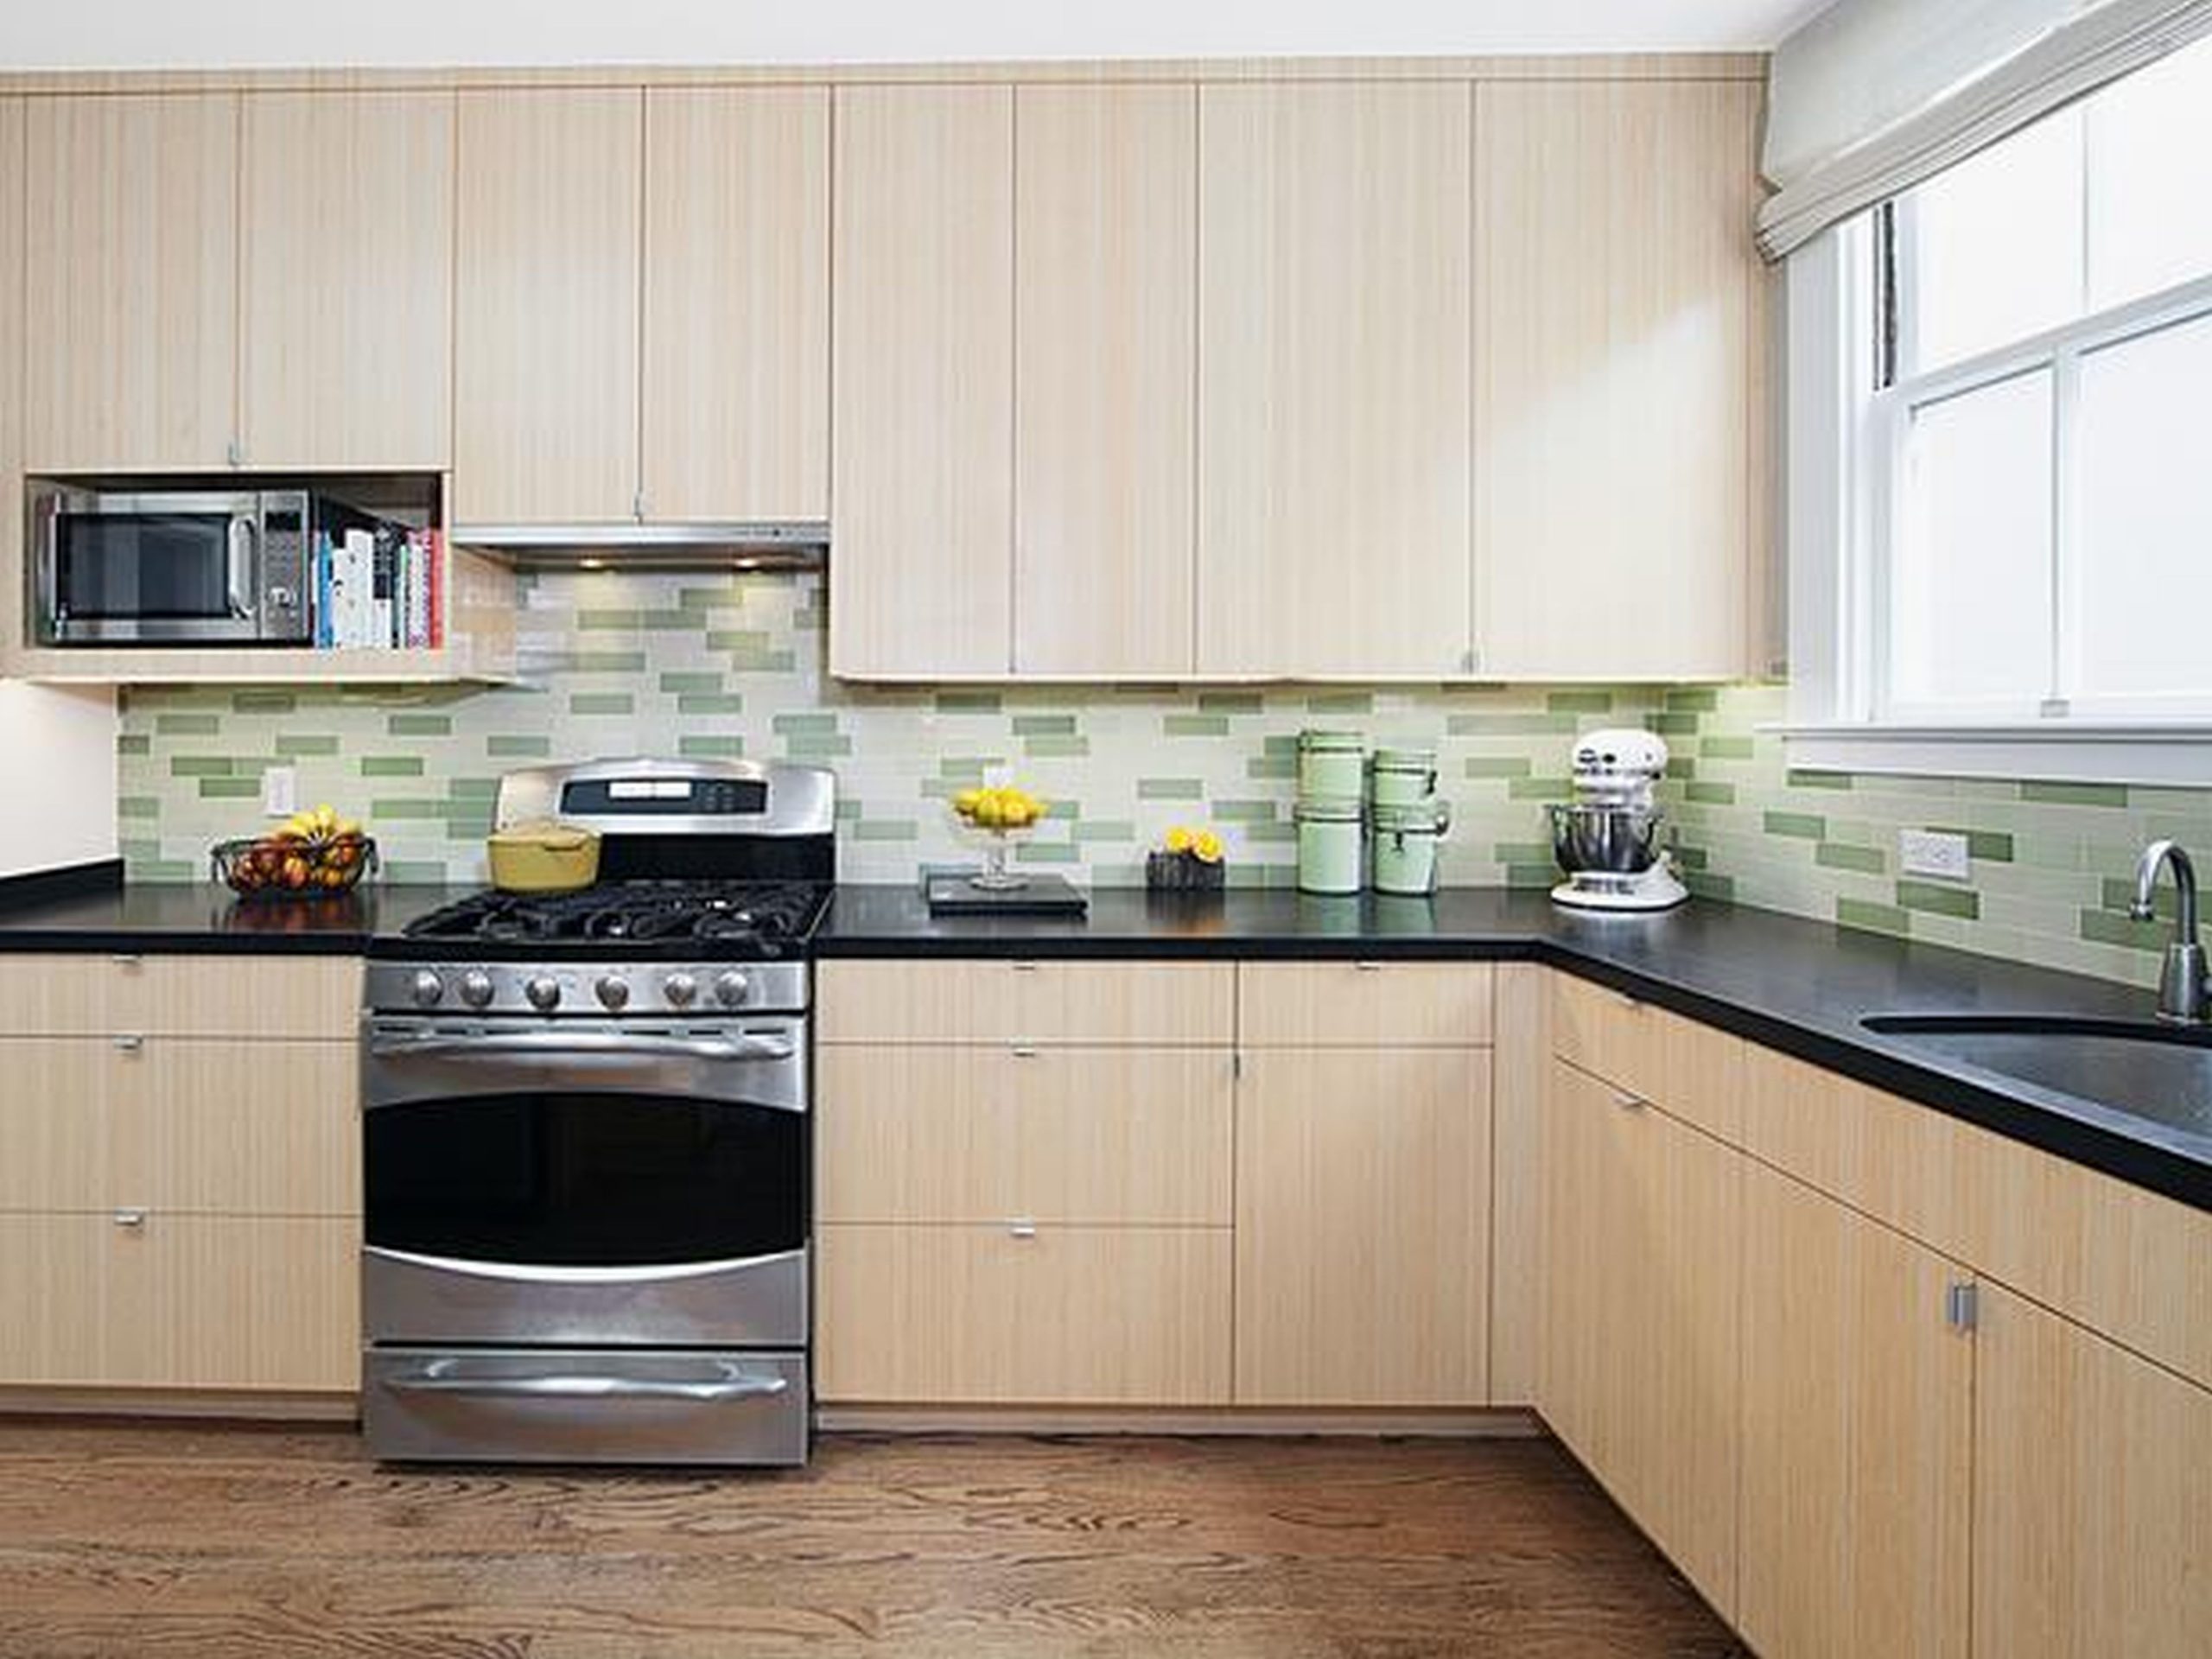 kitchen countertop and backsplash designs
 Everything That You Should Know about Kitchen Backsplash ..